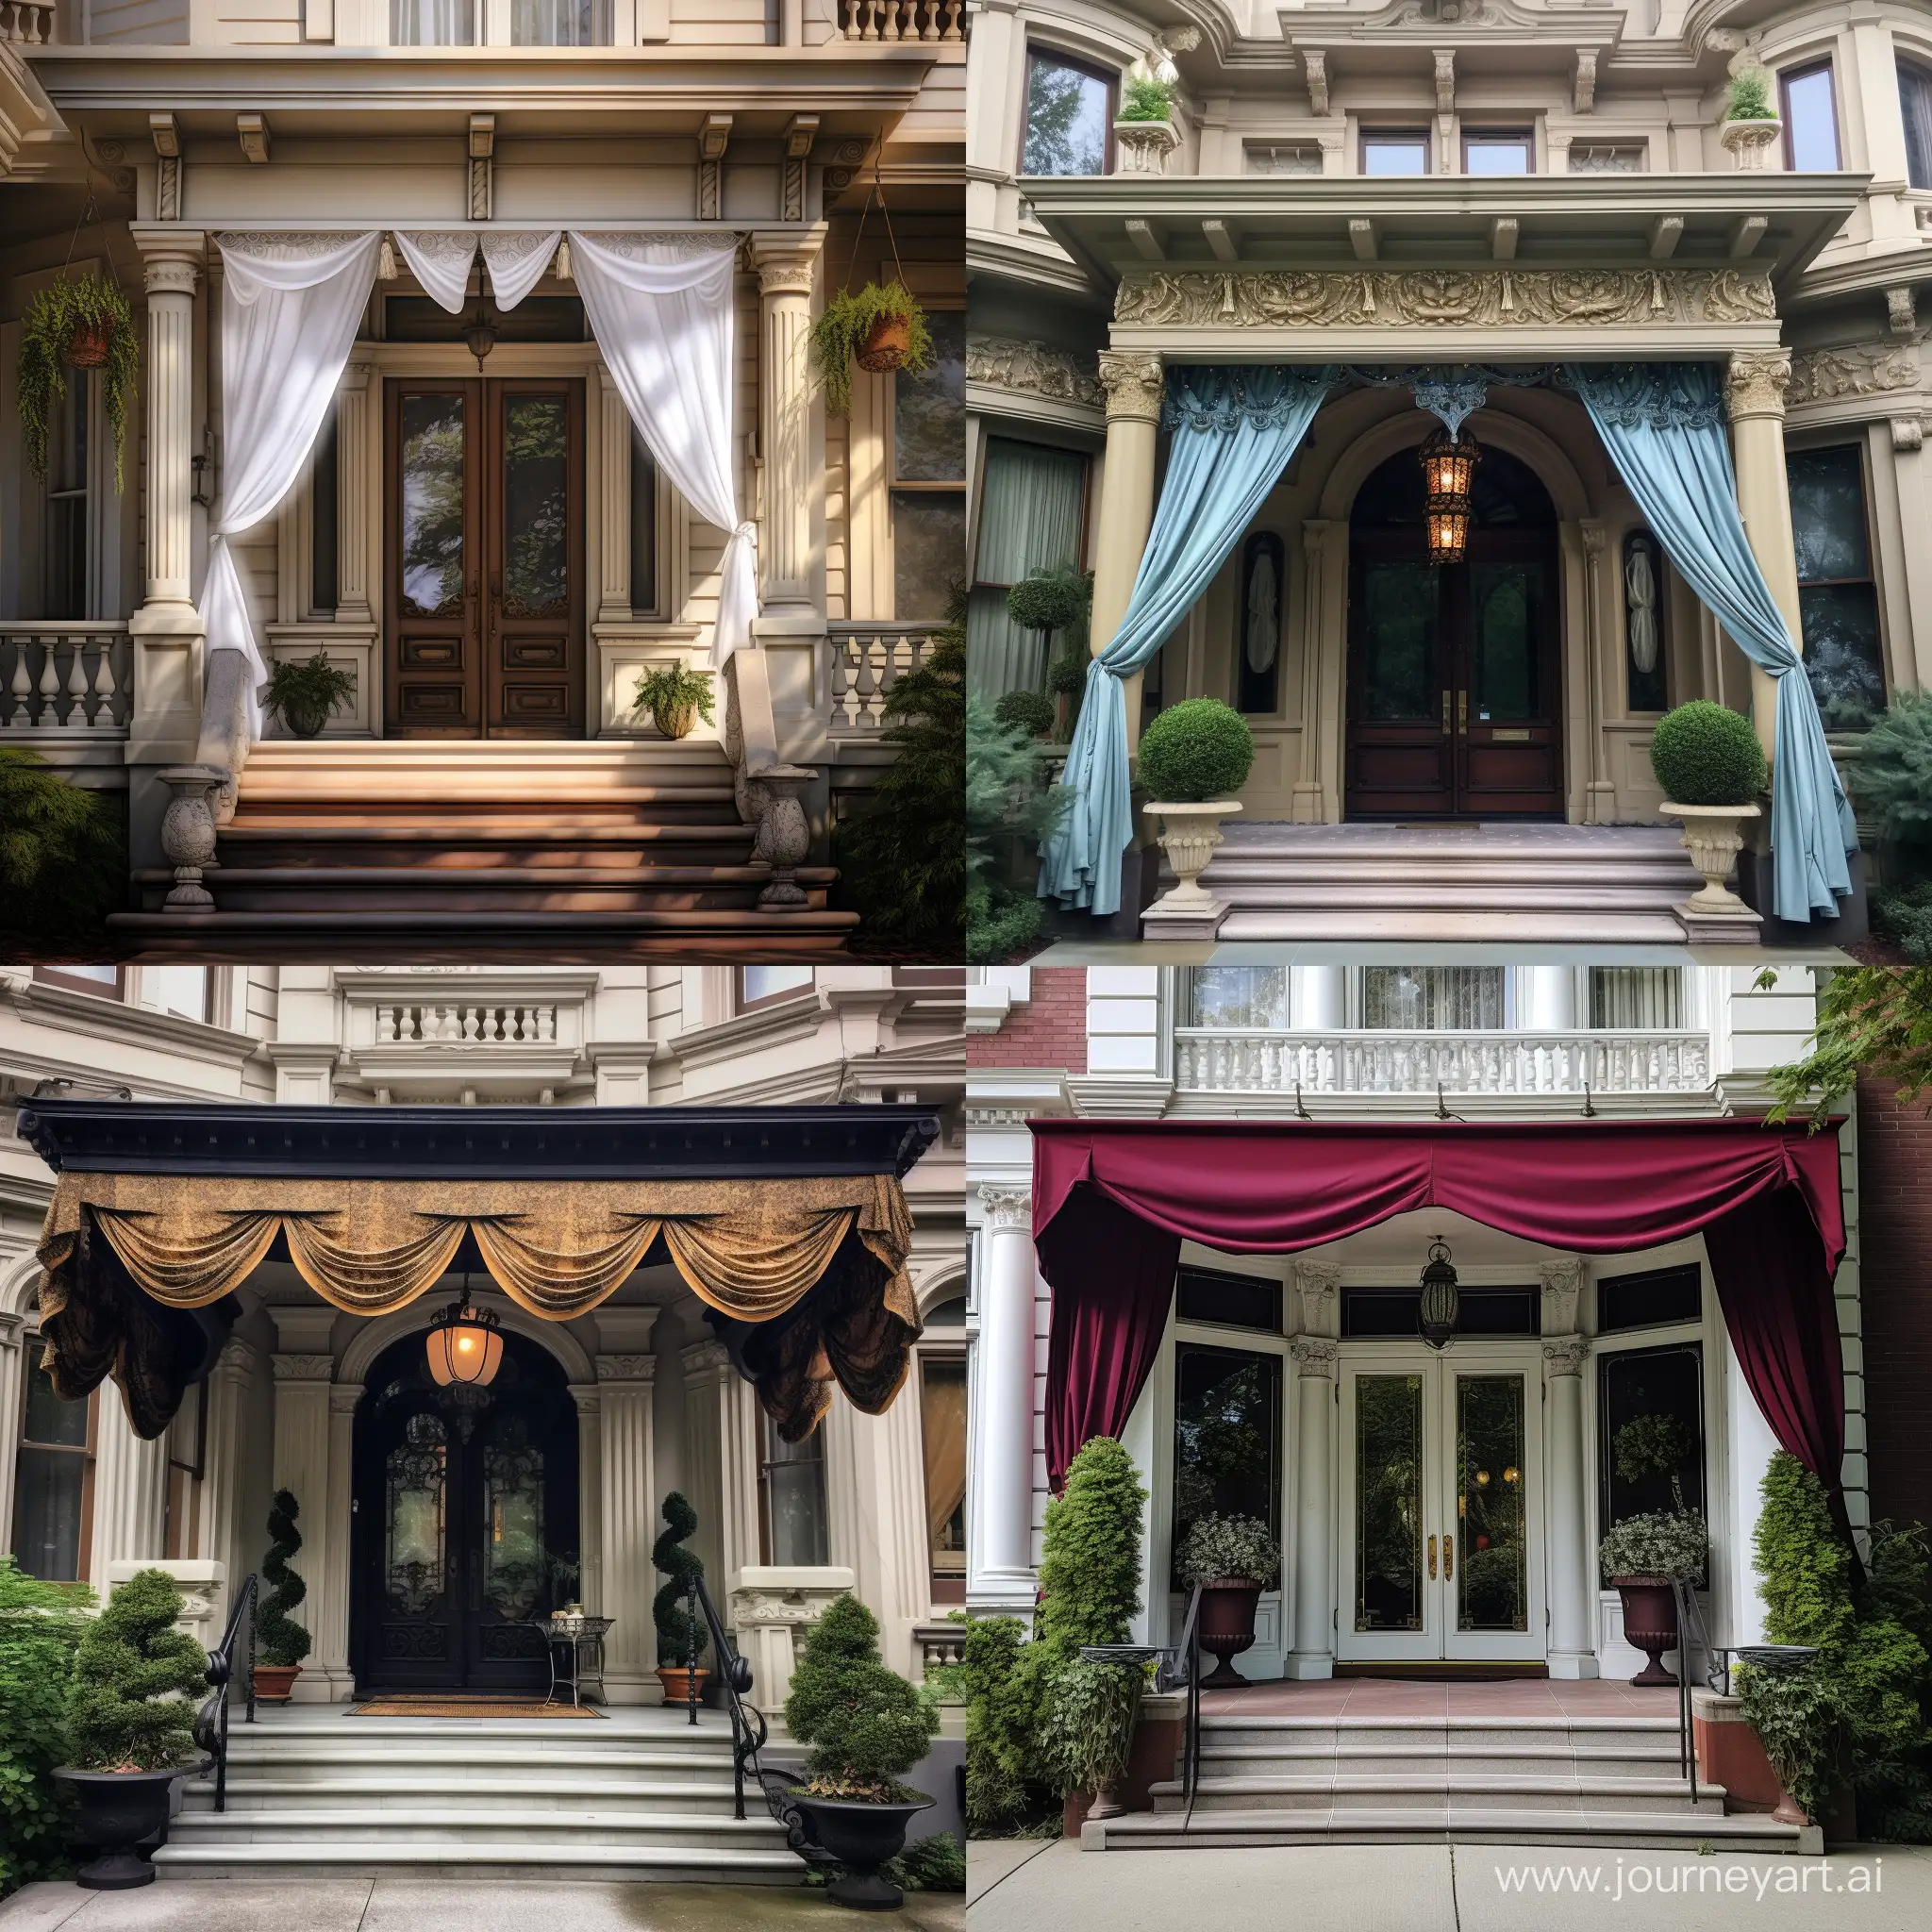 Elegant-Porch-Canopy-at-Mansion-Entrance